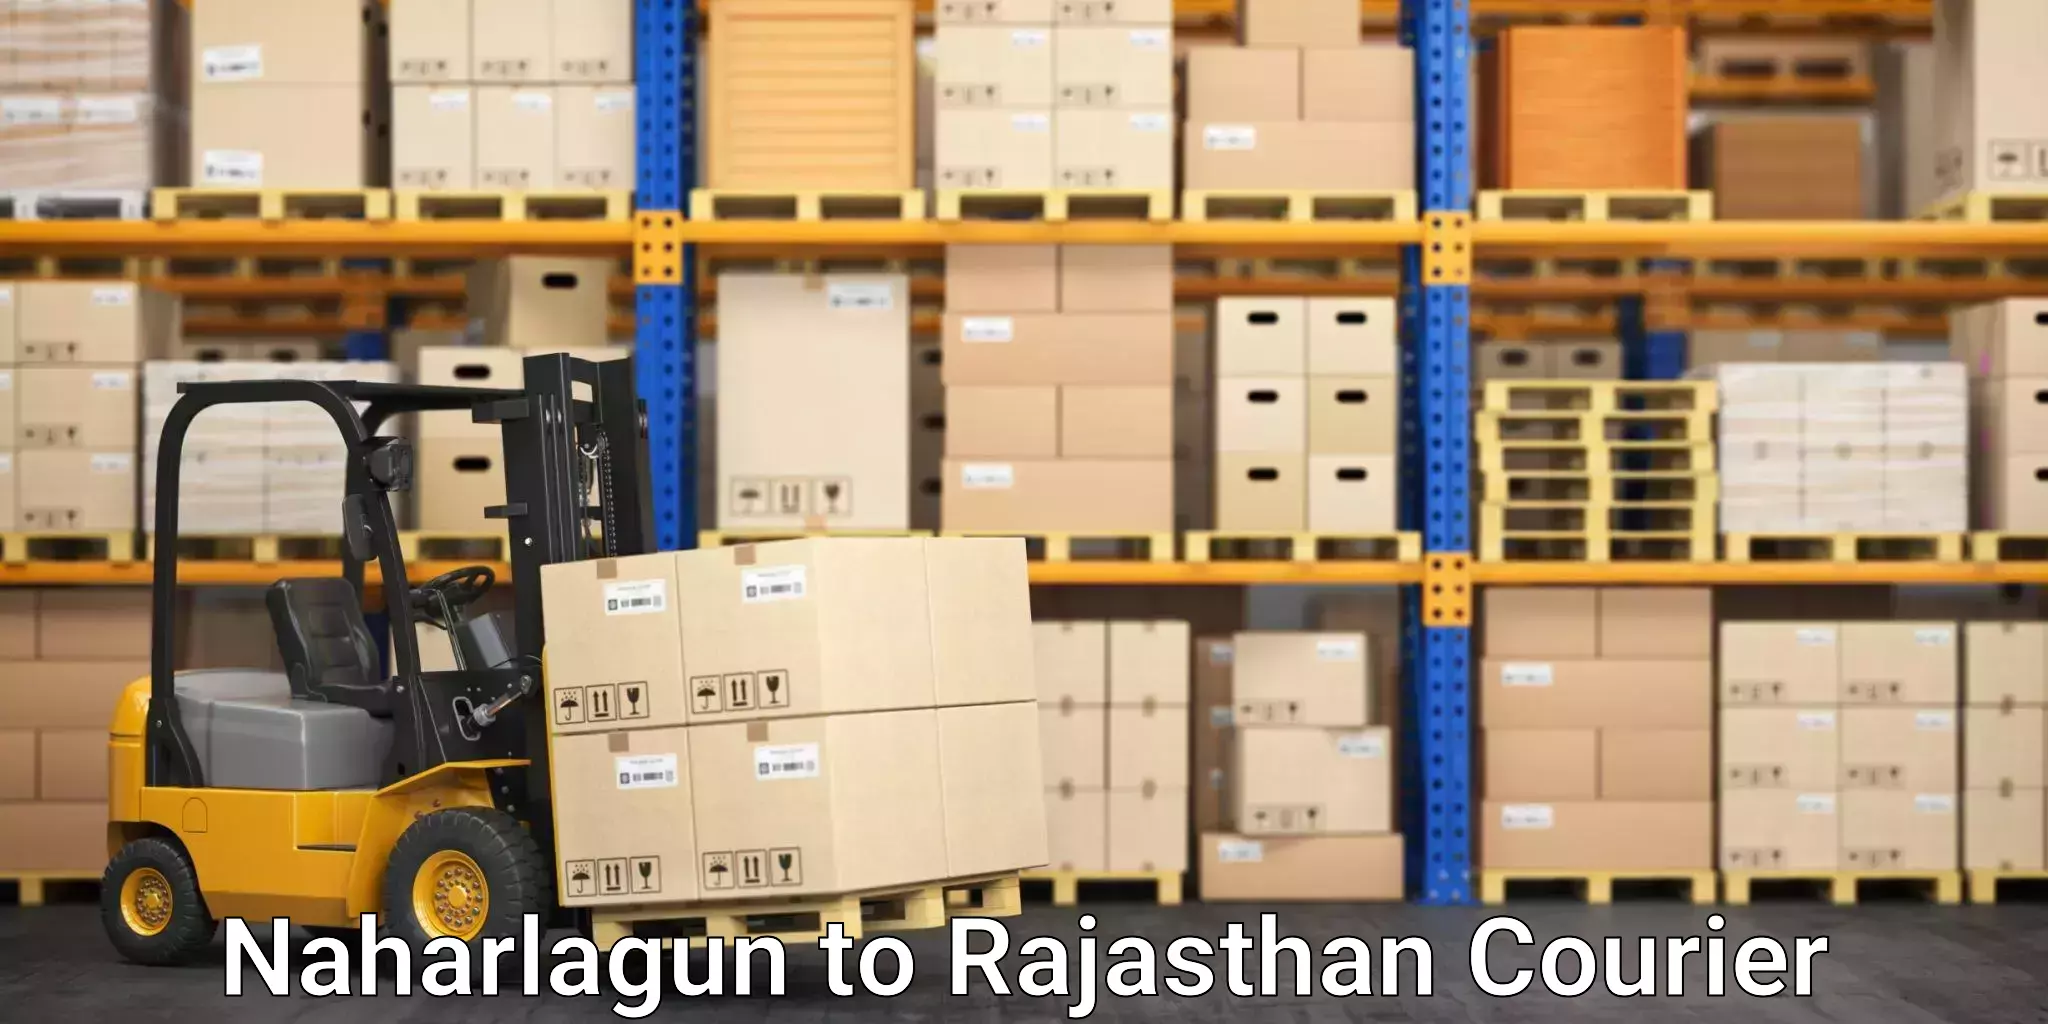 High-speed parcel service Naharlagun to Dholpur